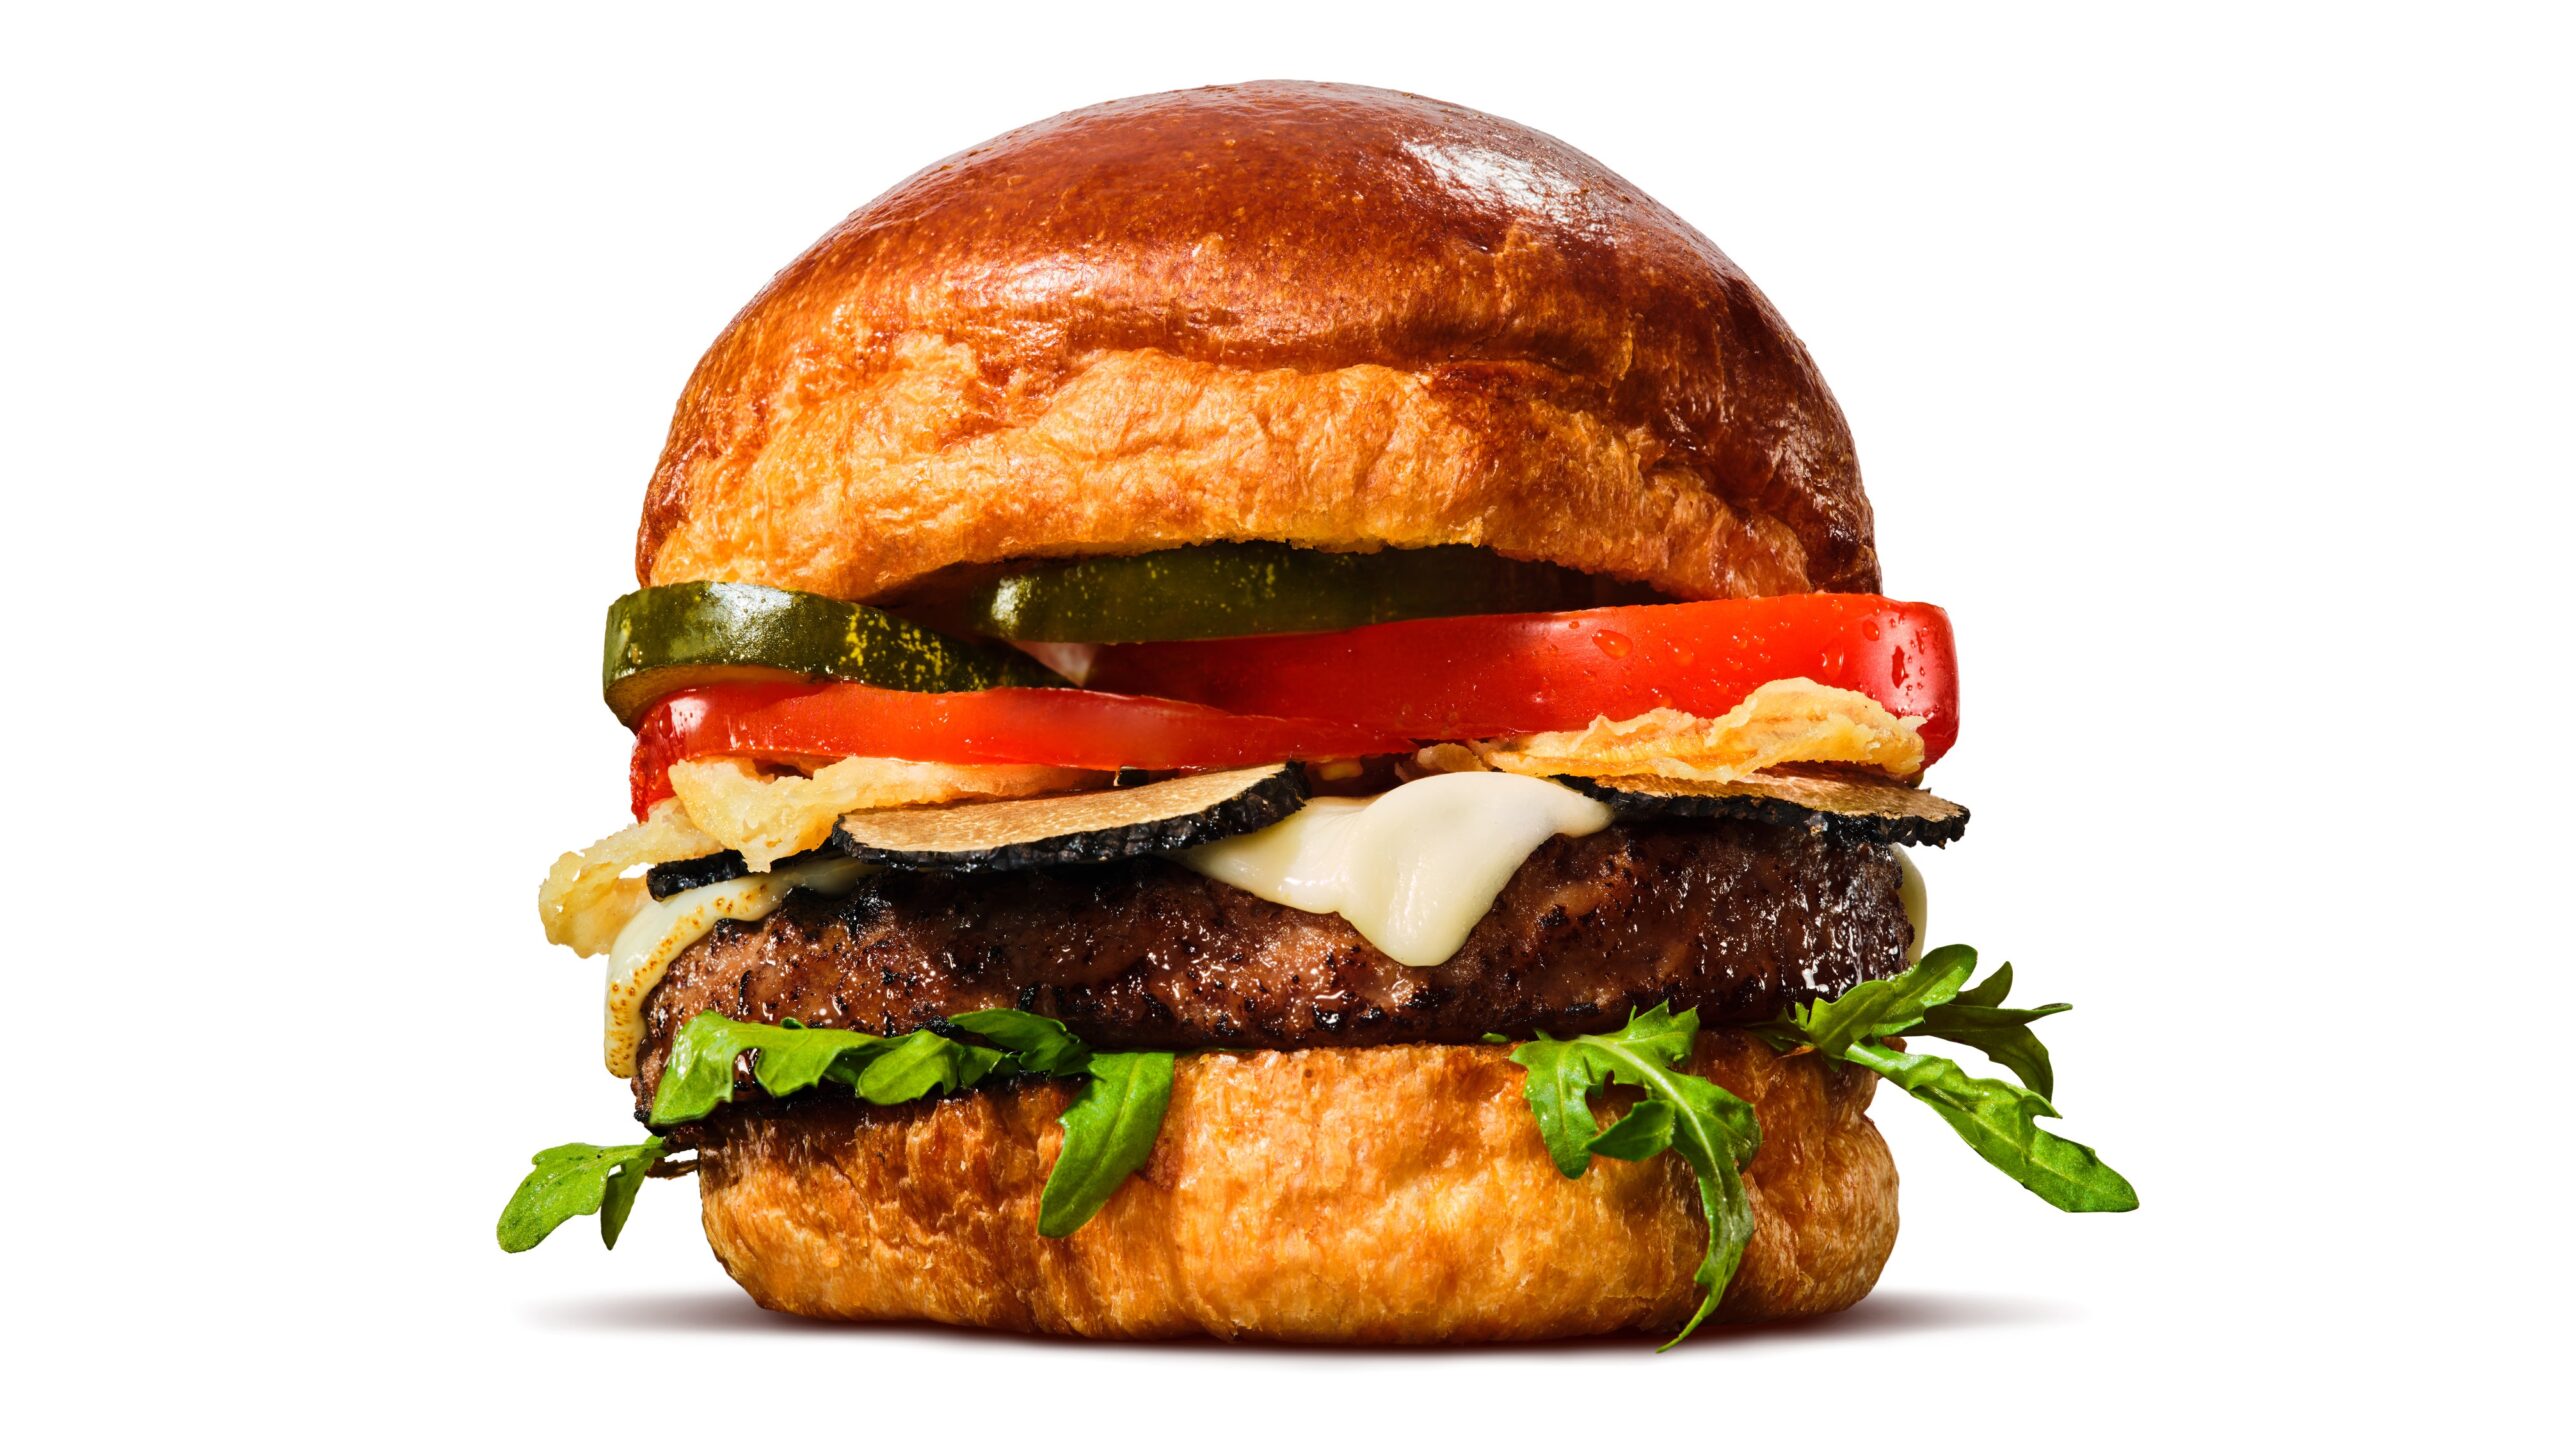 Impossible’s Indulgent Burger Is Its Beefiest, Juiciest Patty Yet. But Is It Good?